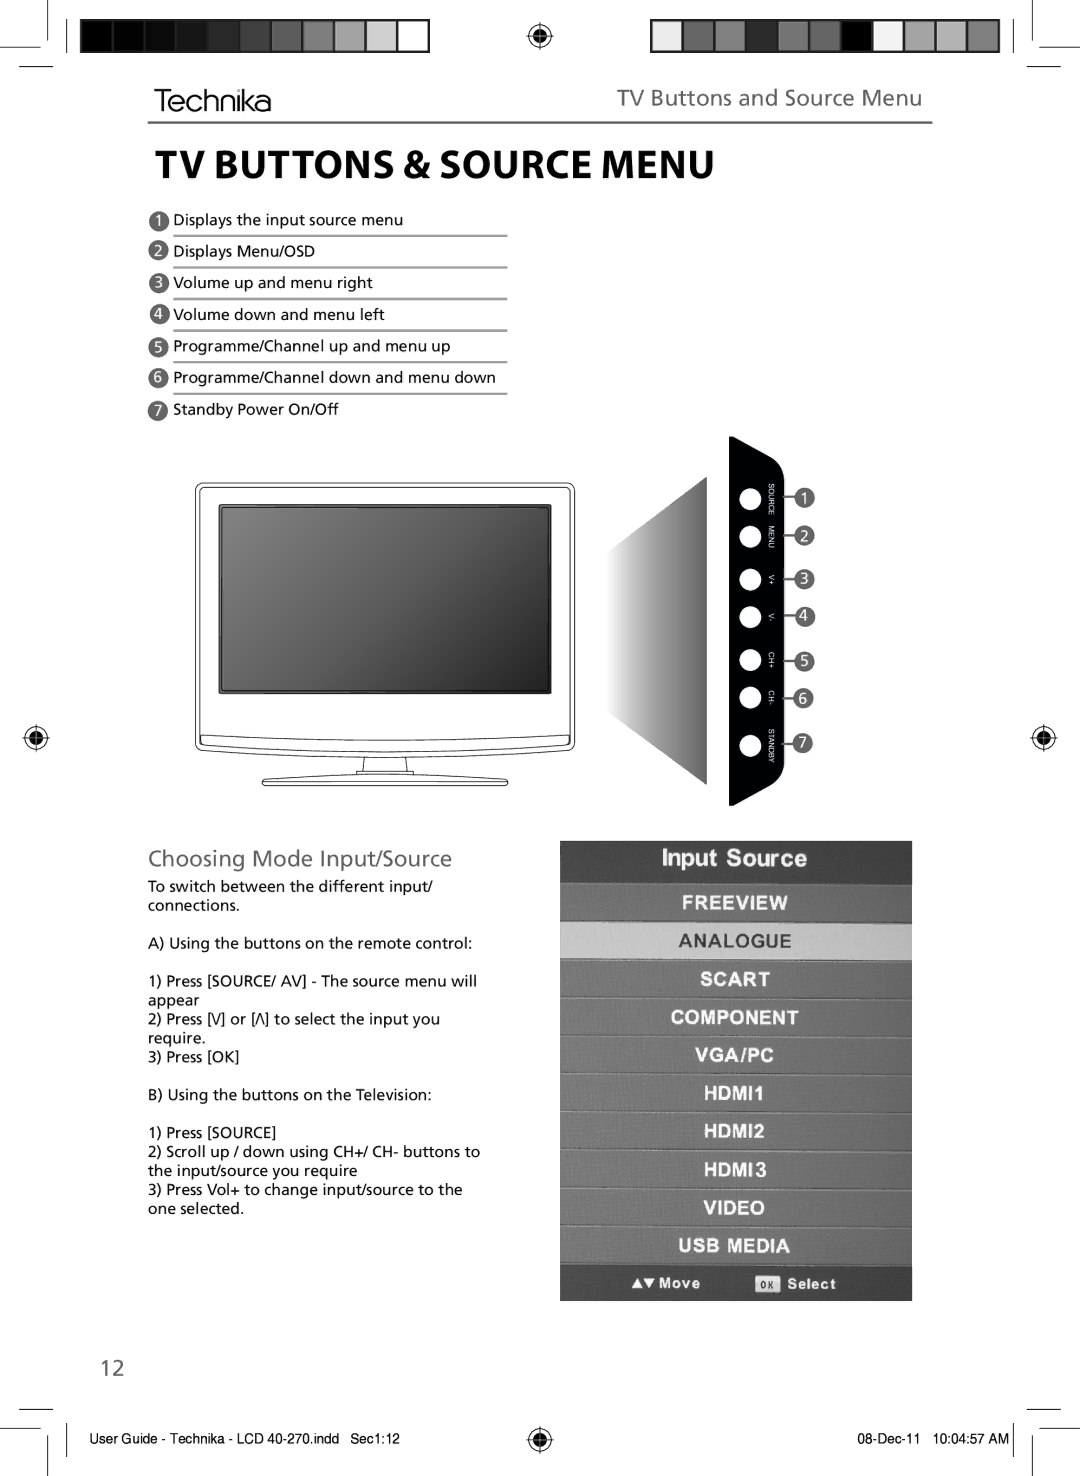 Technika LCD 40-270 manual TV Buttons & Source Menu, TV Buttons and Source Menu, Choosing Mode Input/Source 